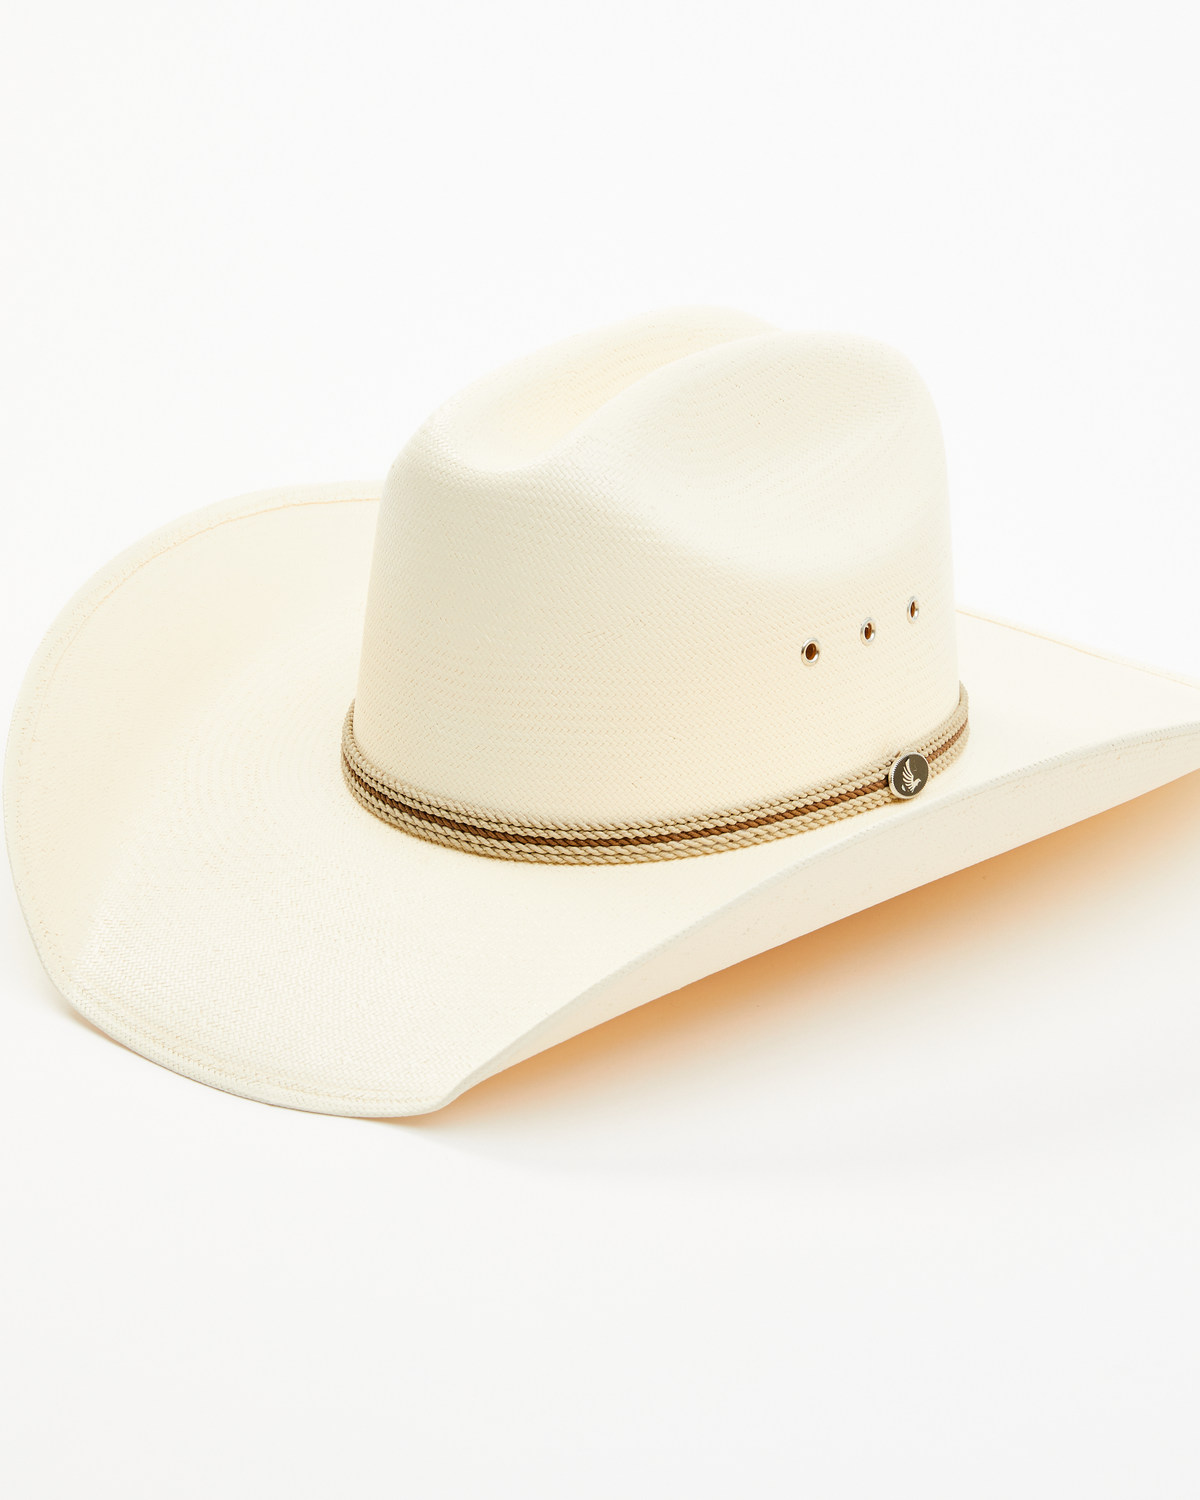 Cody James Blue Ridge 50X Straw Cowboy Hat